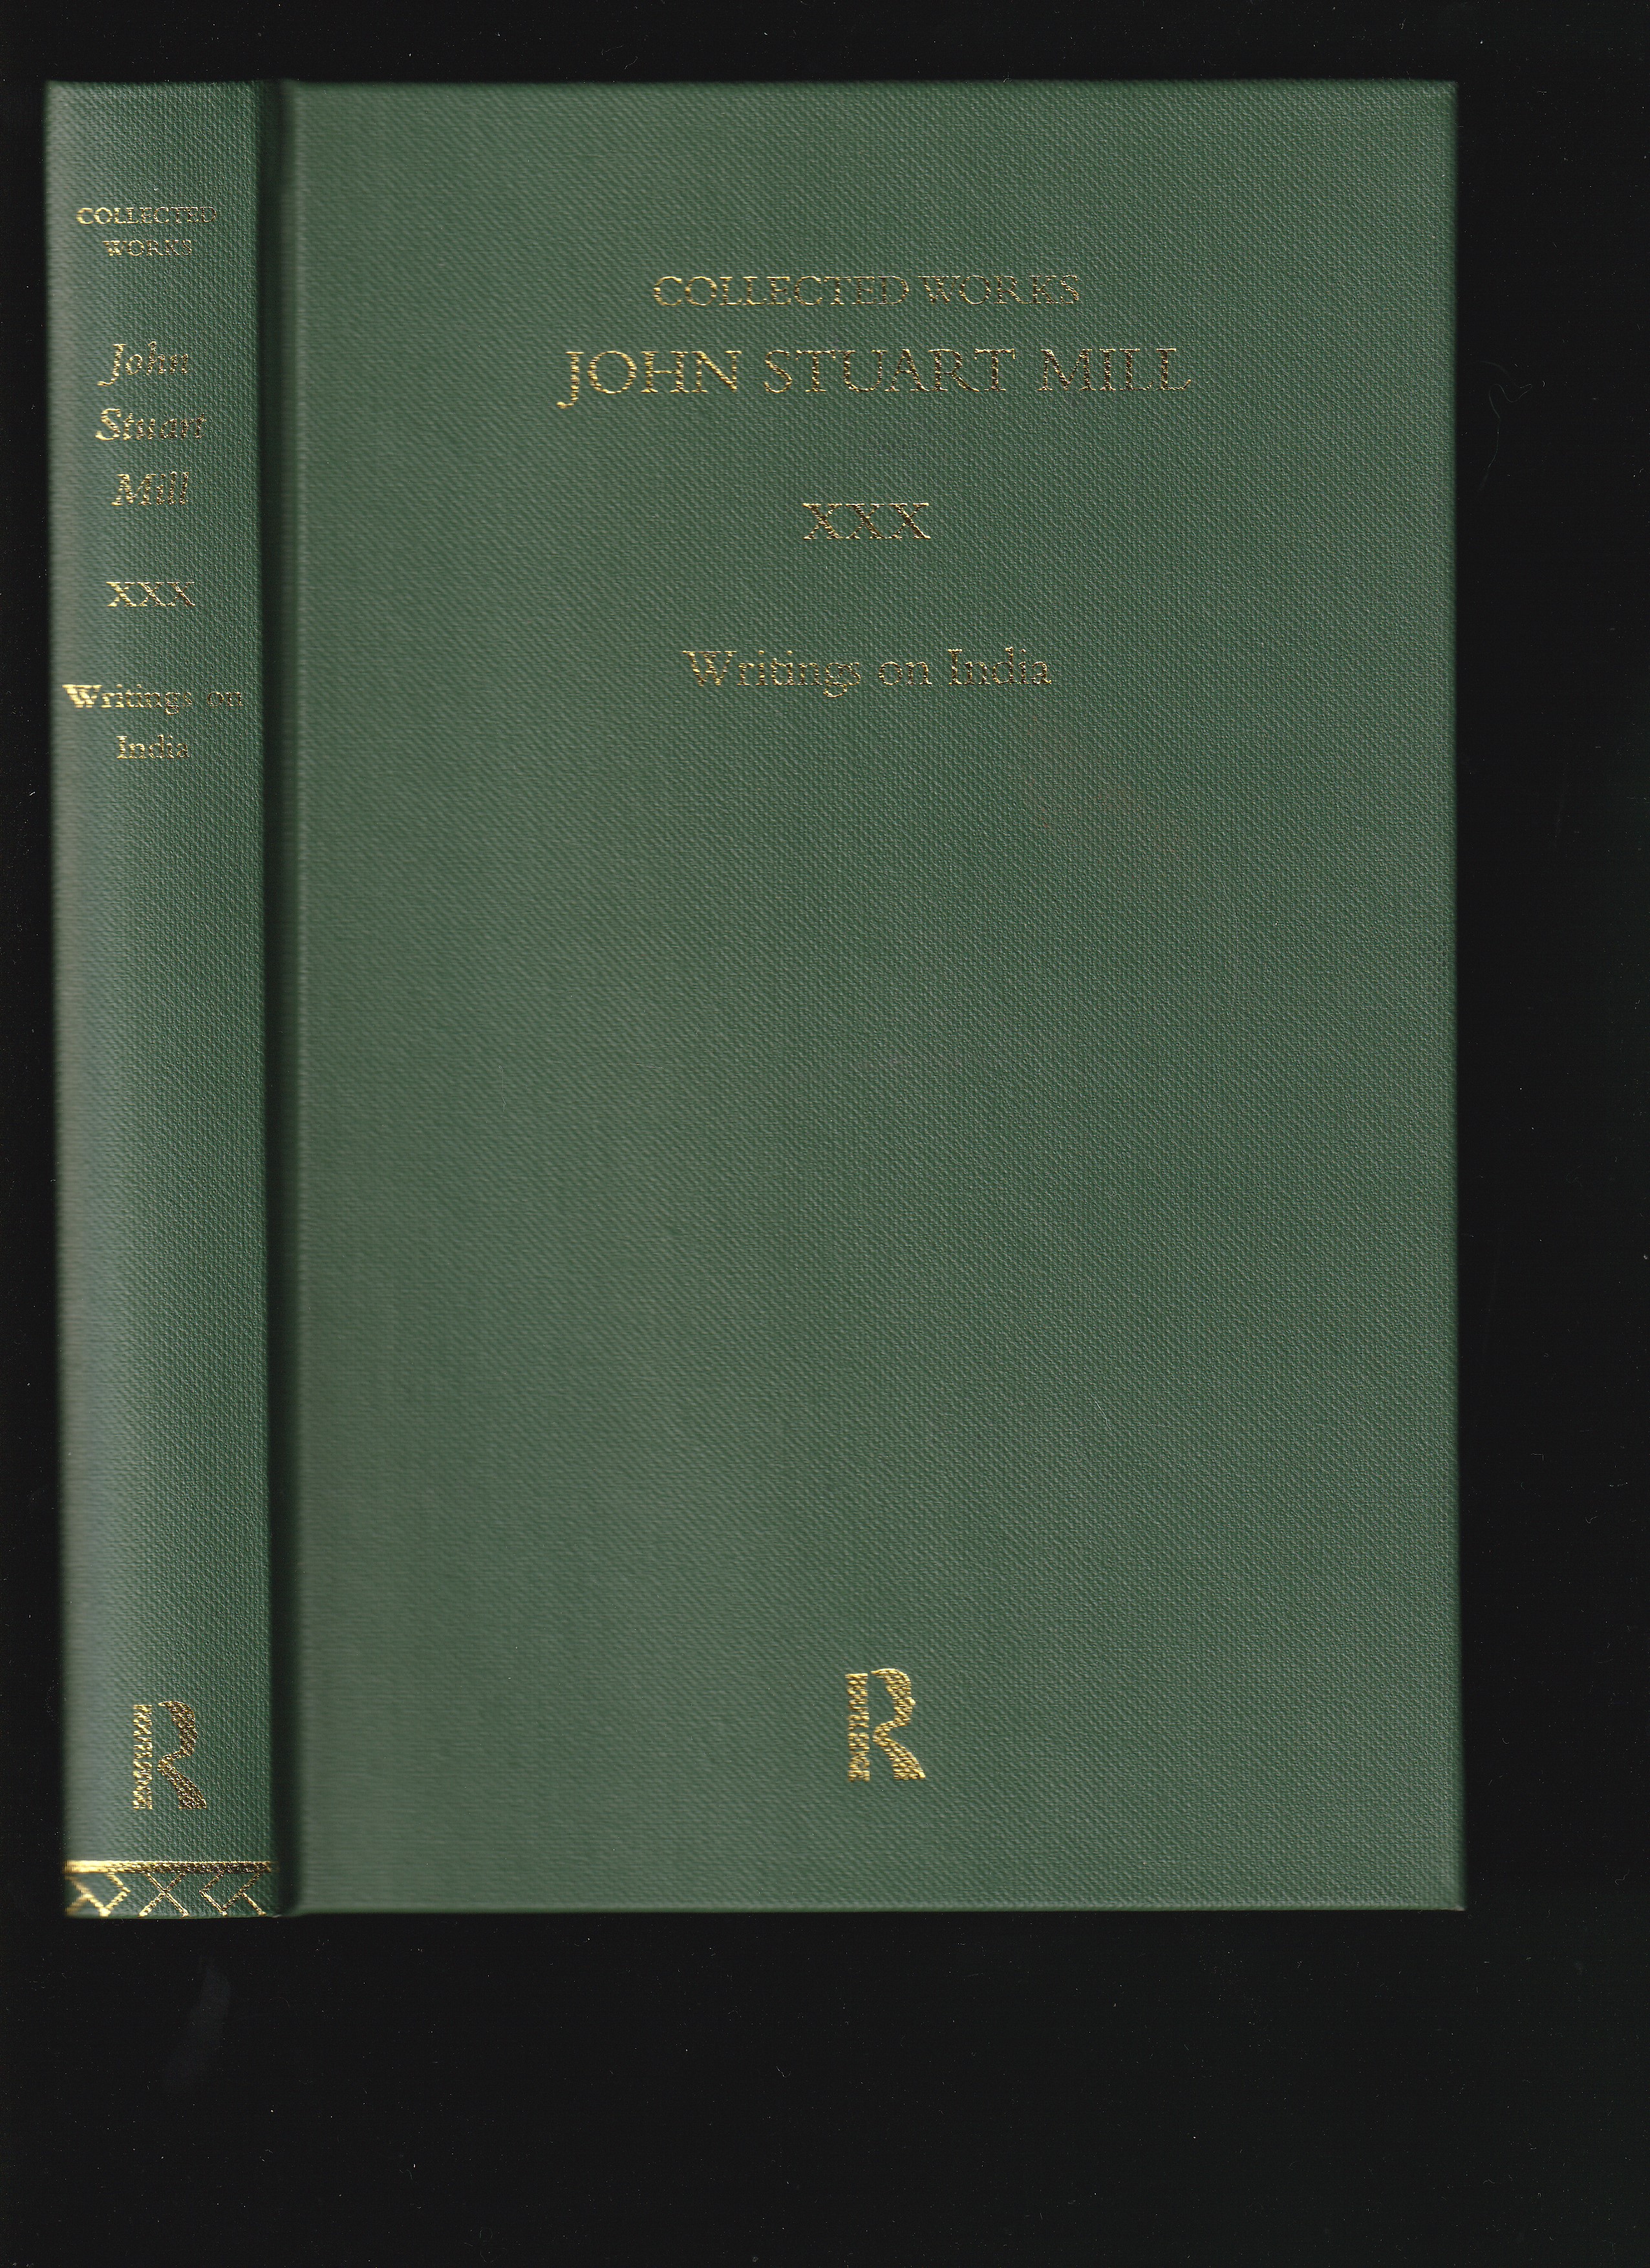 WRITINGS ON INDIA: COLLECTED WORKS OF JOHN STUART MILL Volume XXX Edited by John M. Robson, Martin Moir, and Zawahir Moir - MILL, John Stuart